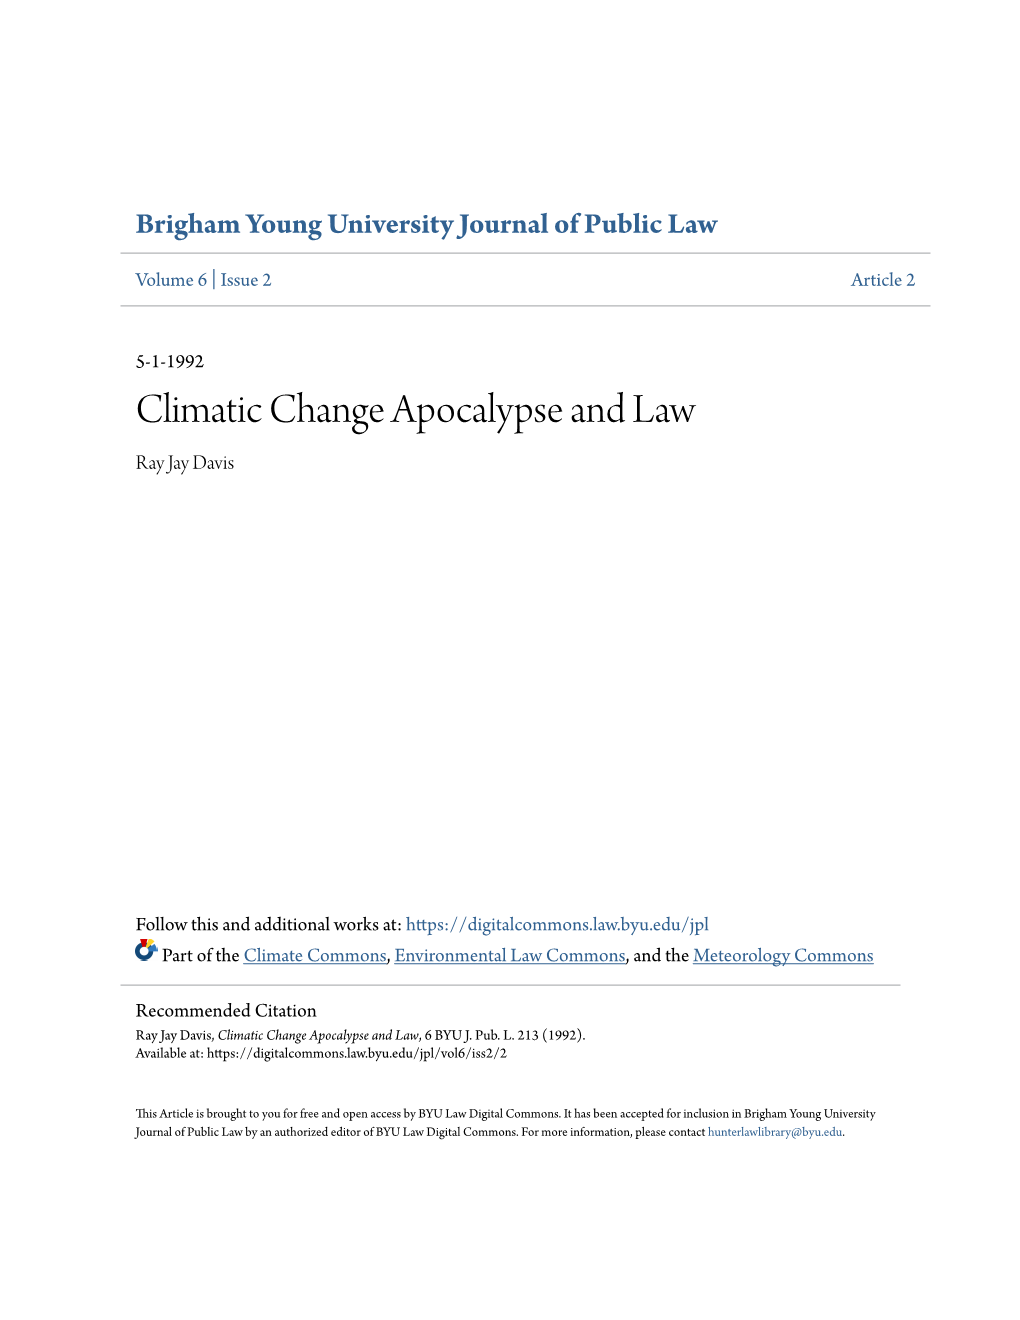 Climatic Change Apocalypse and Law Ray Jay Davis